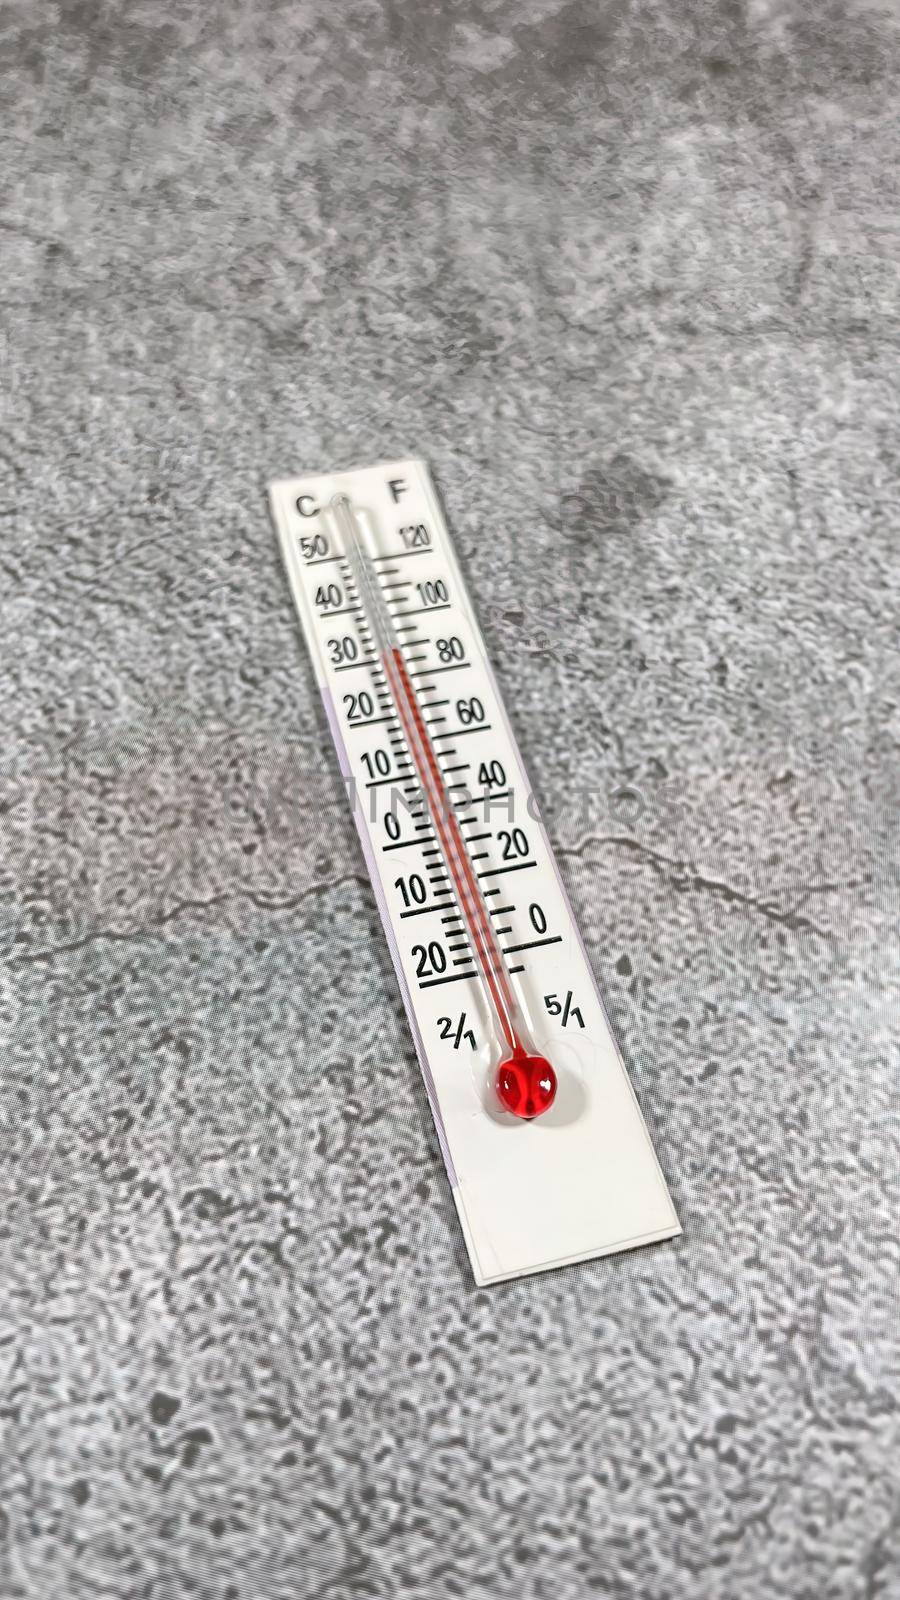 thermometer on the grey background by yilmazsavaskandag